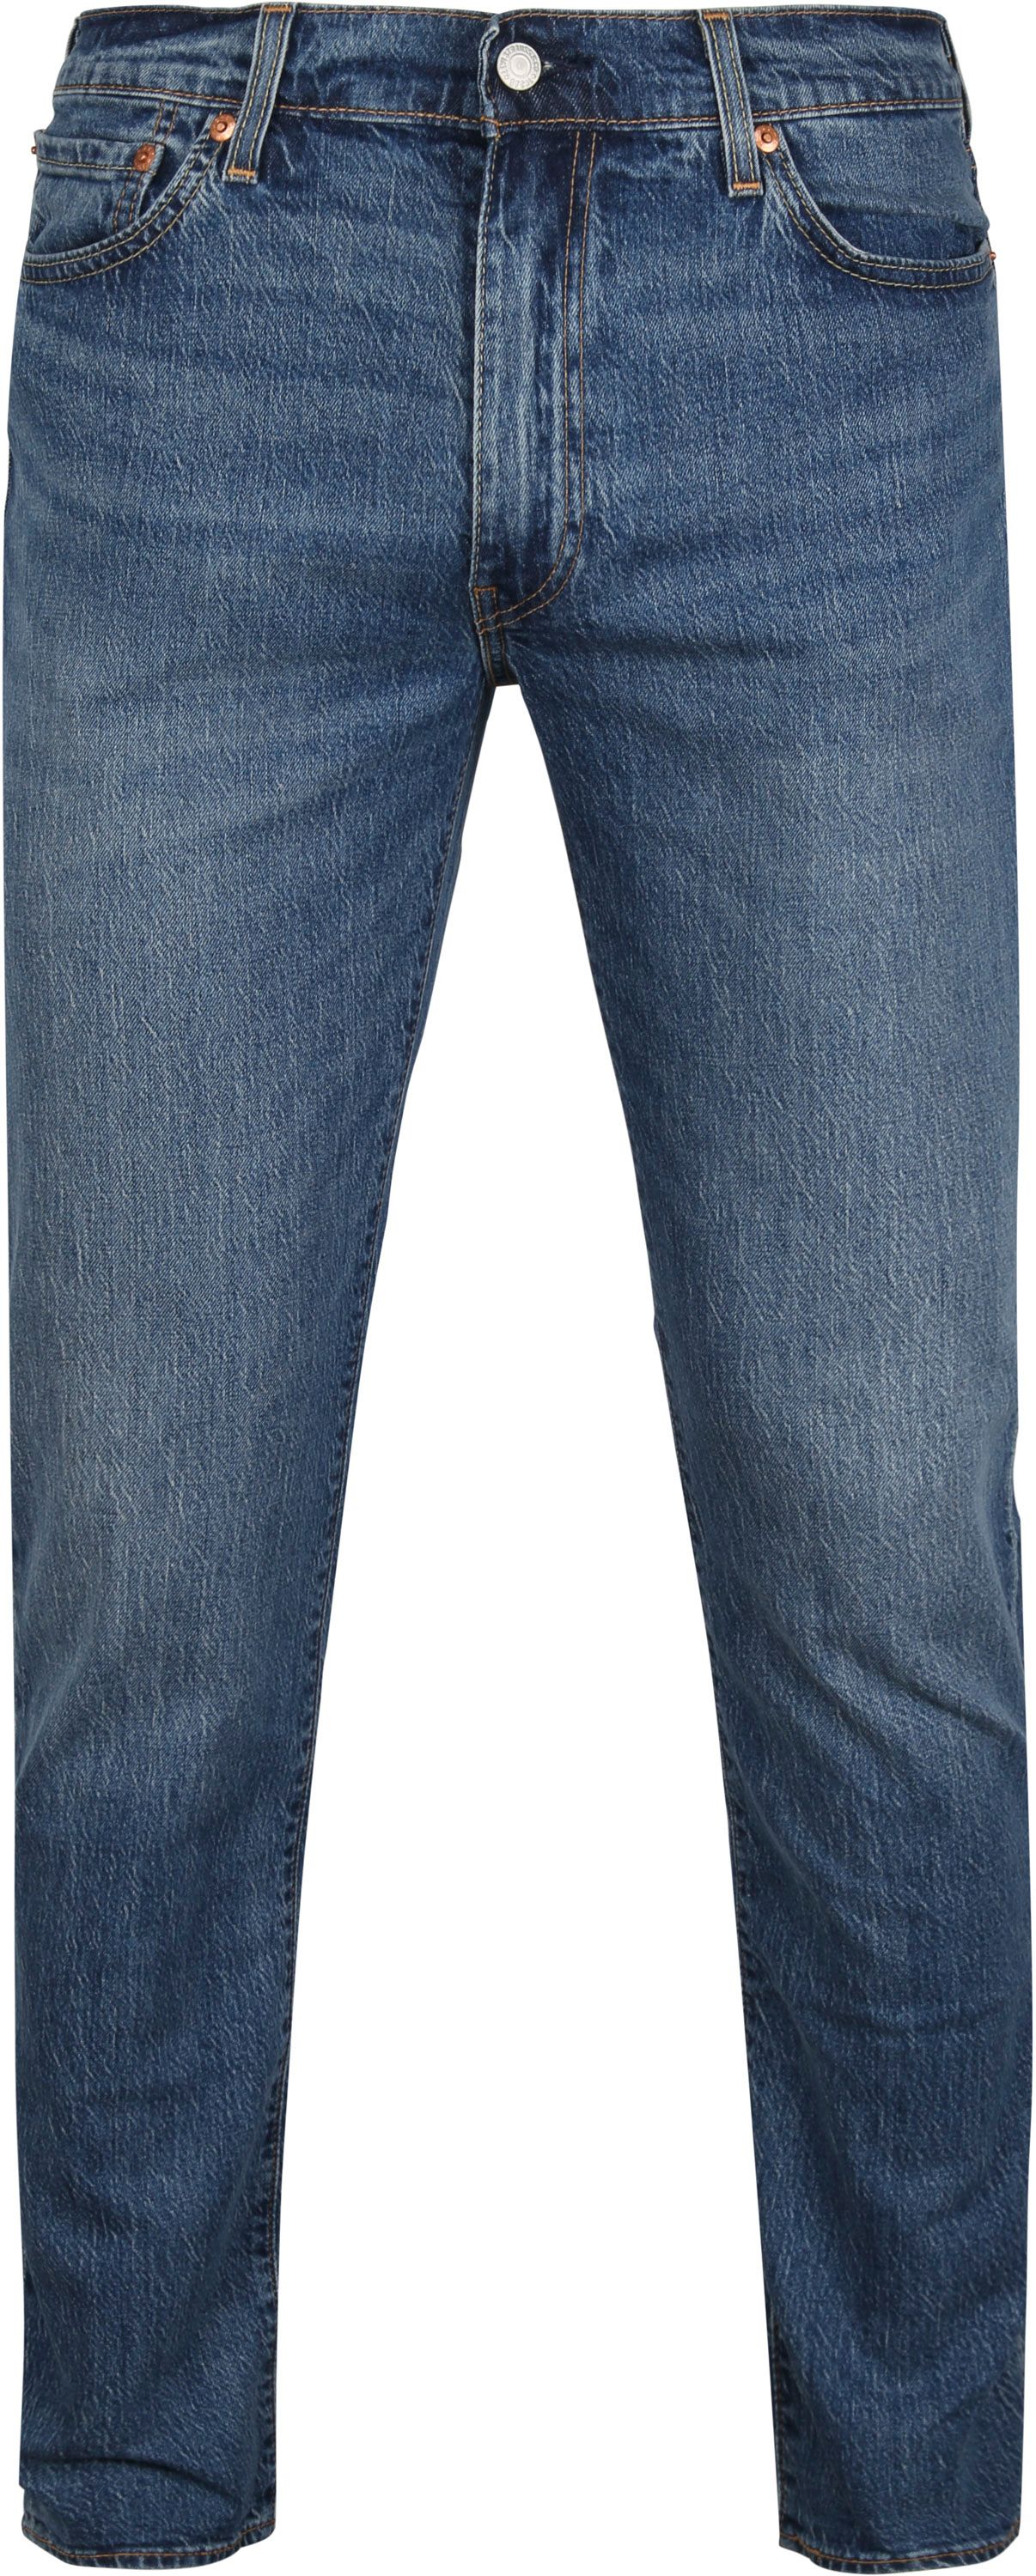 Levi's 511 Denim Jeans Blue size W 30